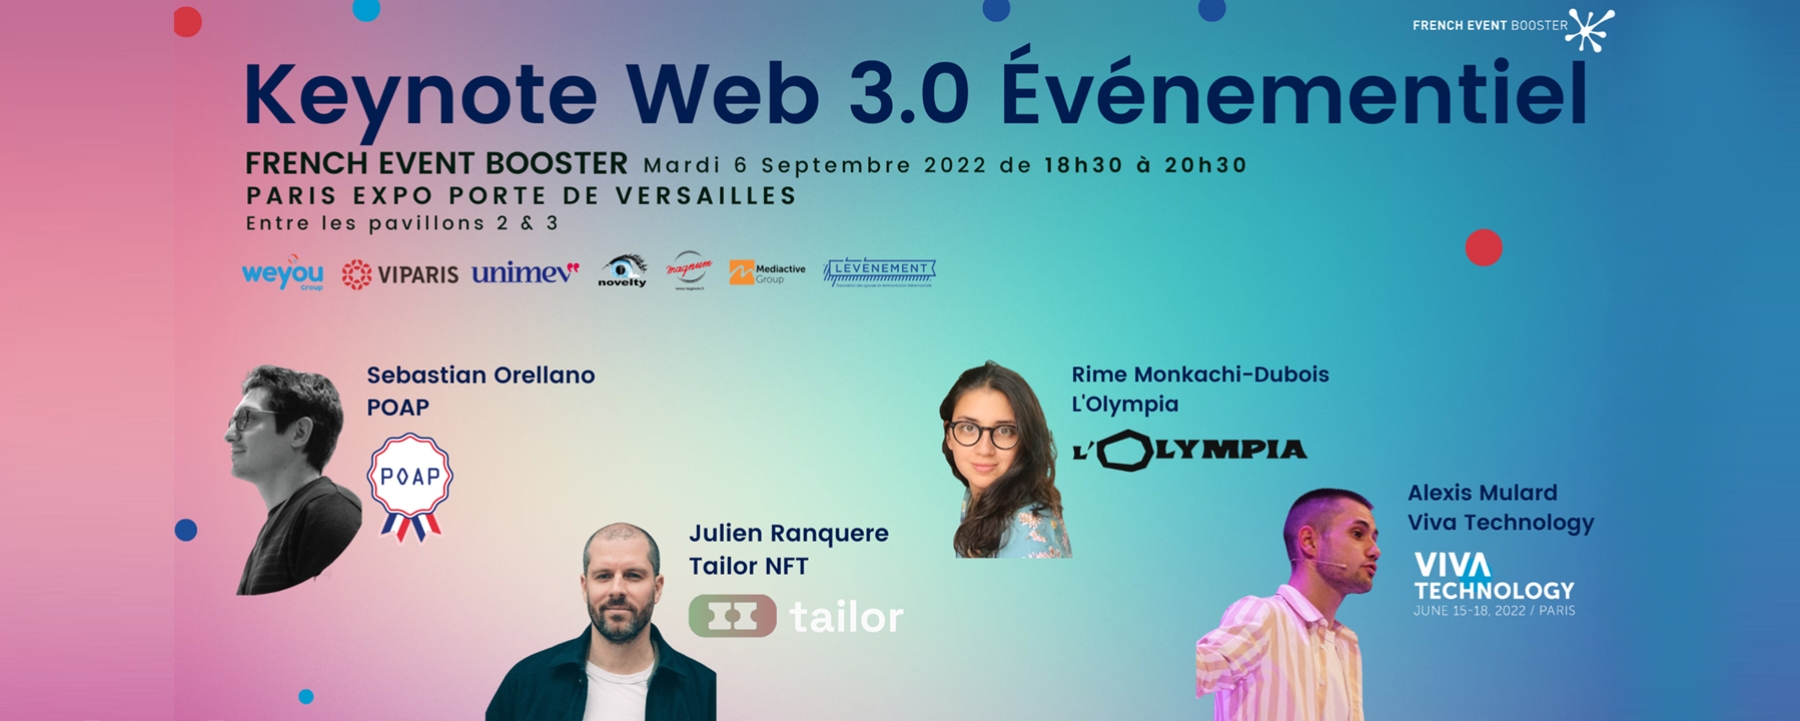 Keynote "Web 3.0 Événementiel" by French Event Booster